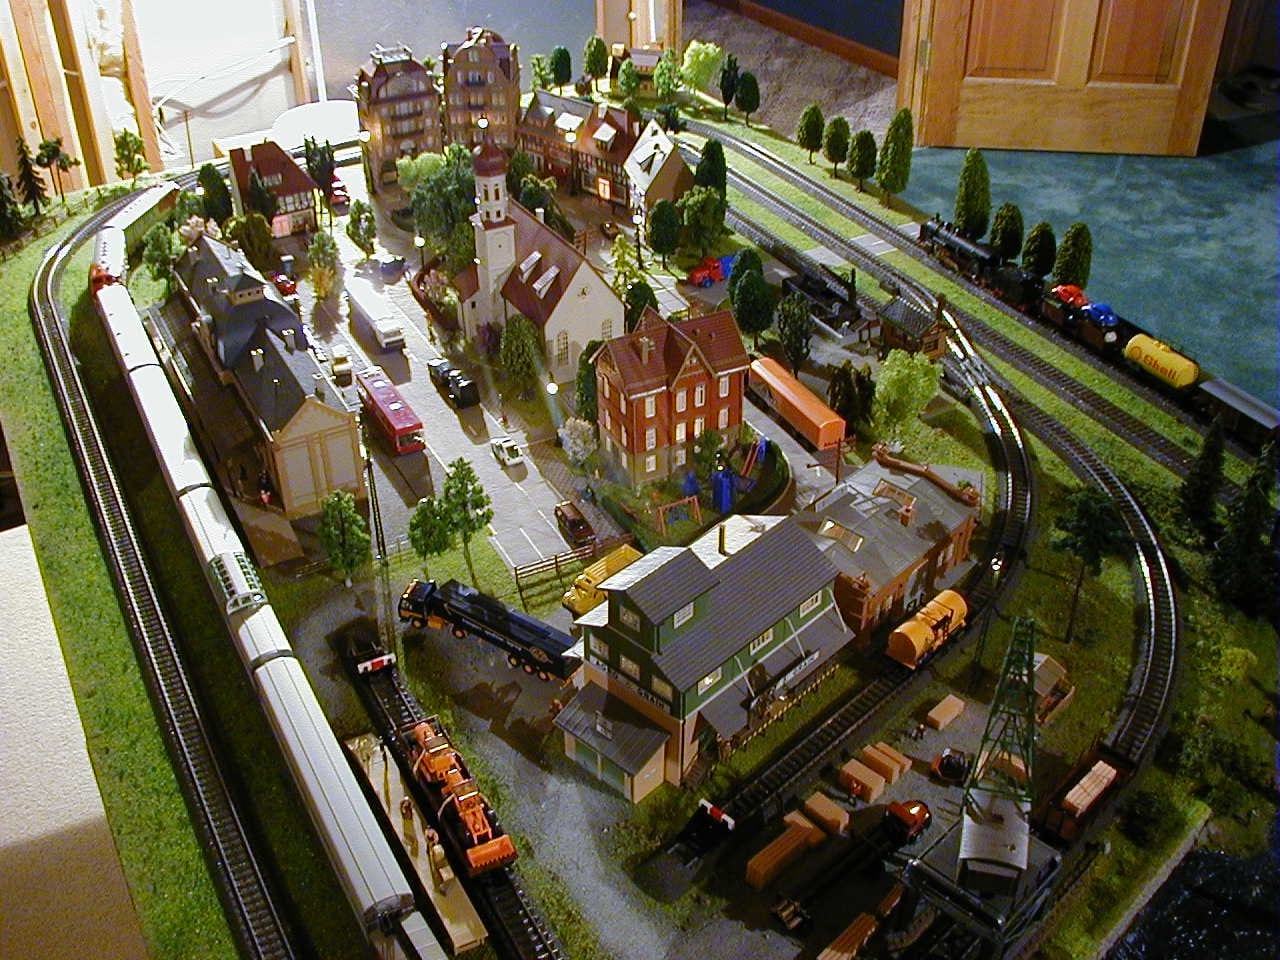 ho scale layout model train image 4 model train layout plans ho model 